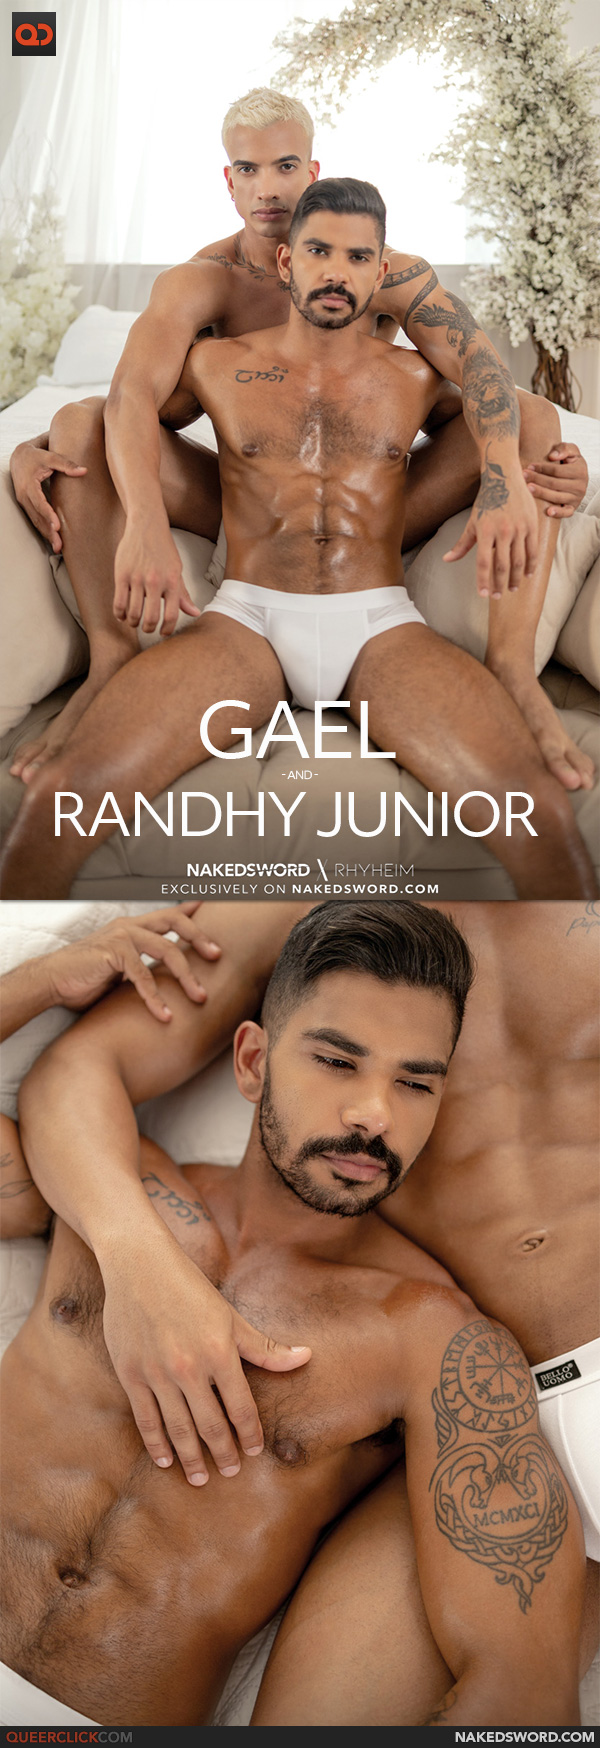 NakedSword X Rhyheim: Gael and Randhy Junior